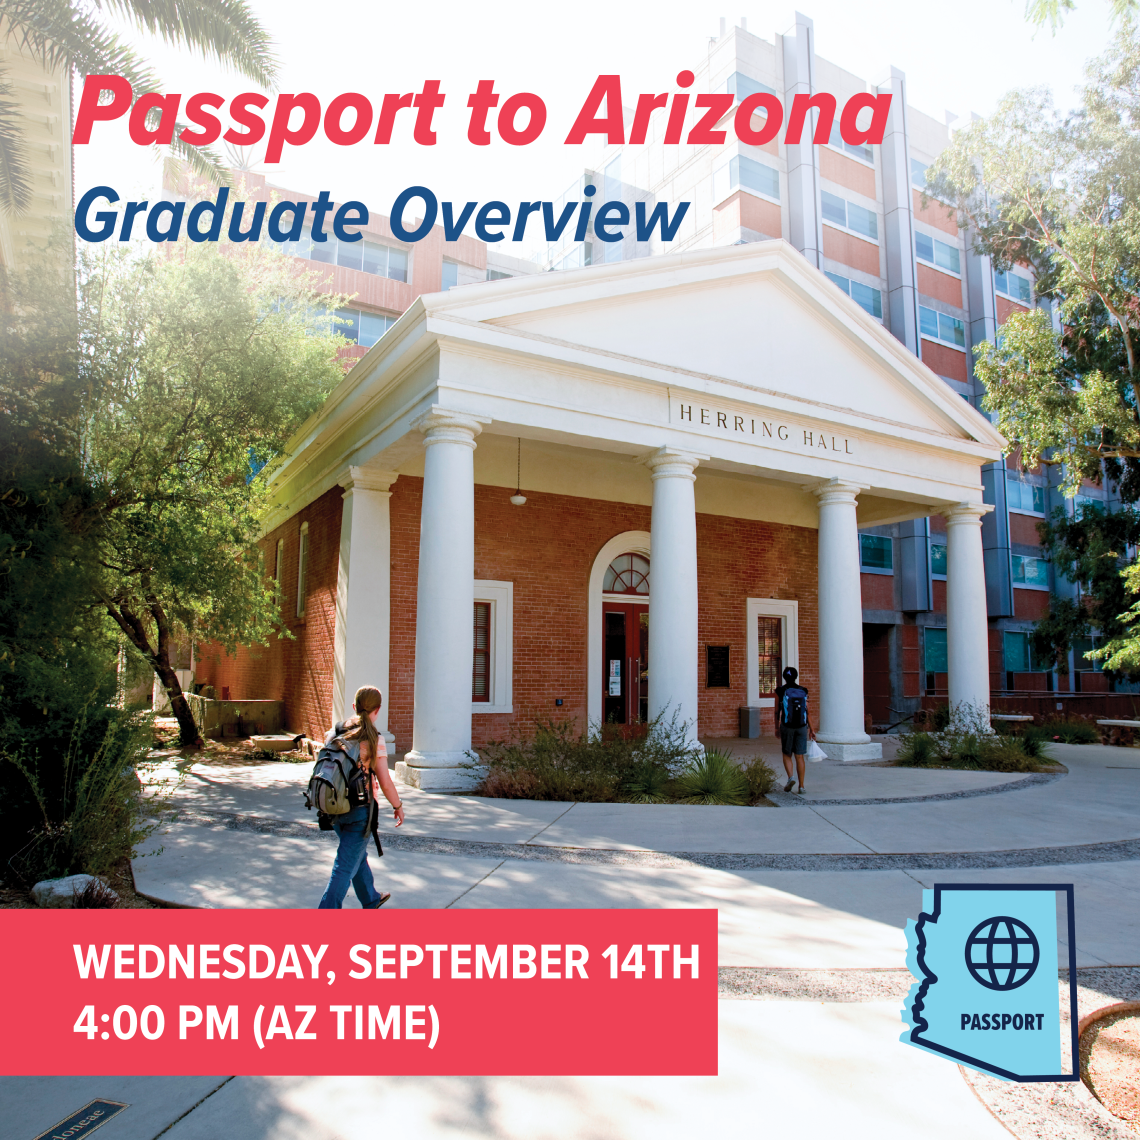 Graduate Overview: Student walking on Arizona campus